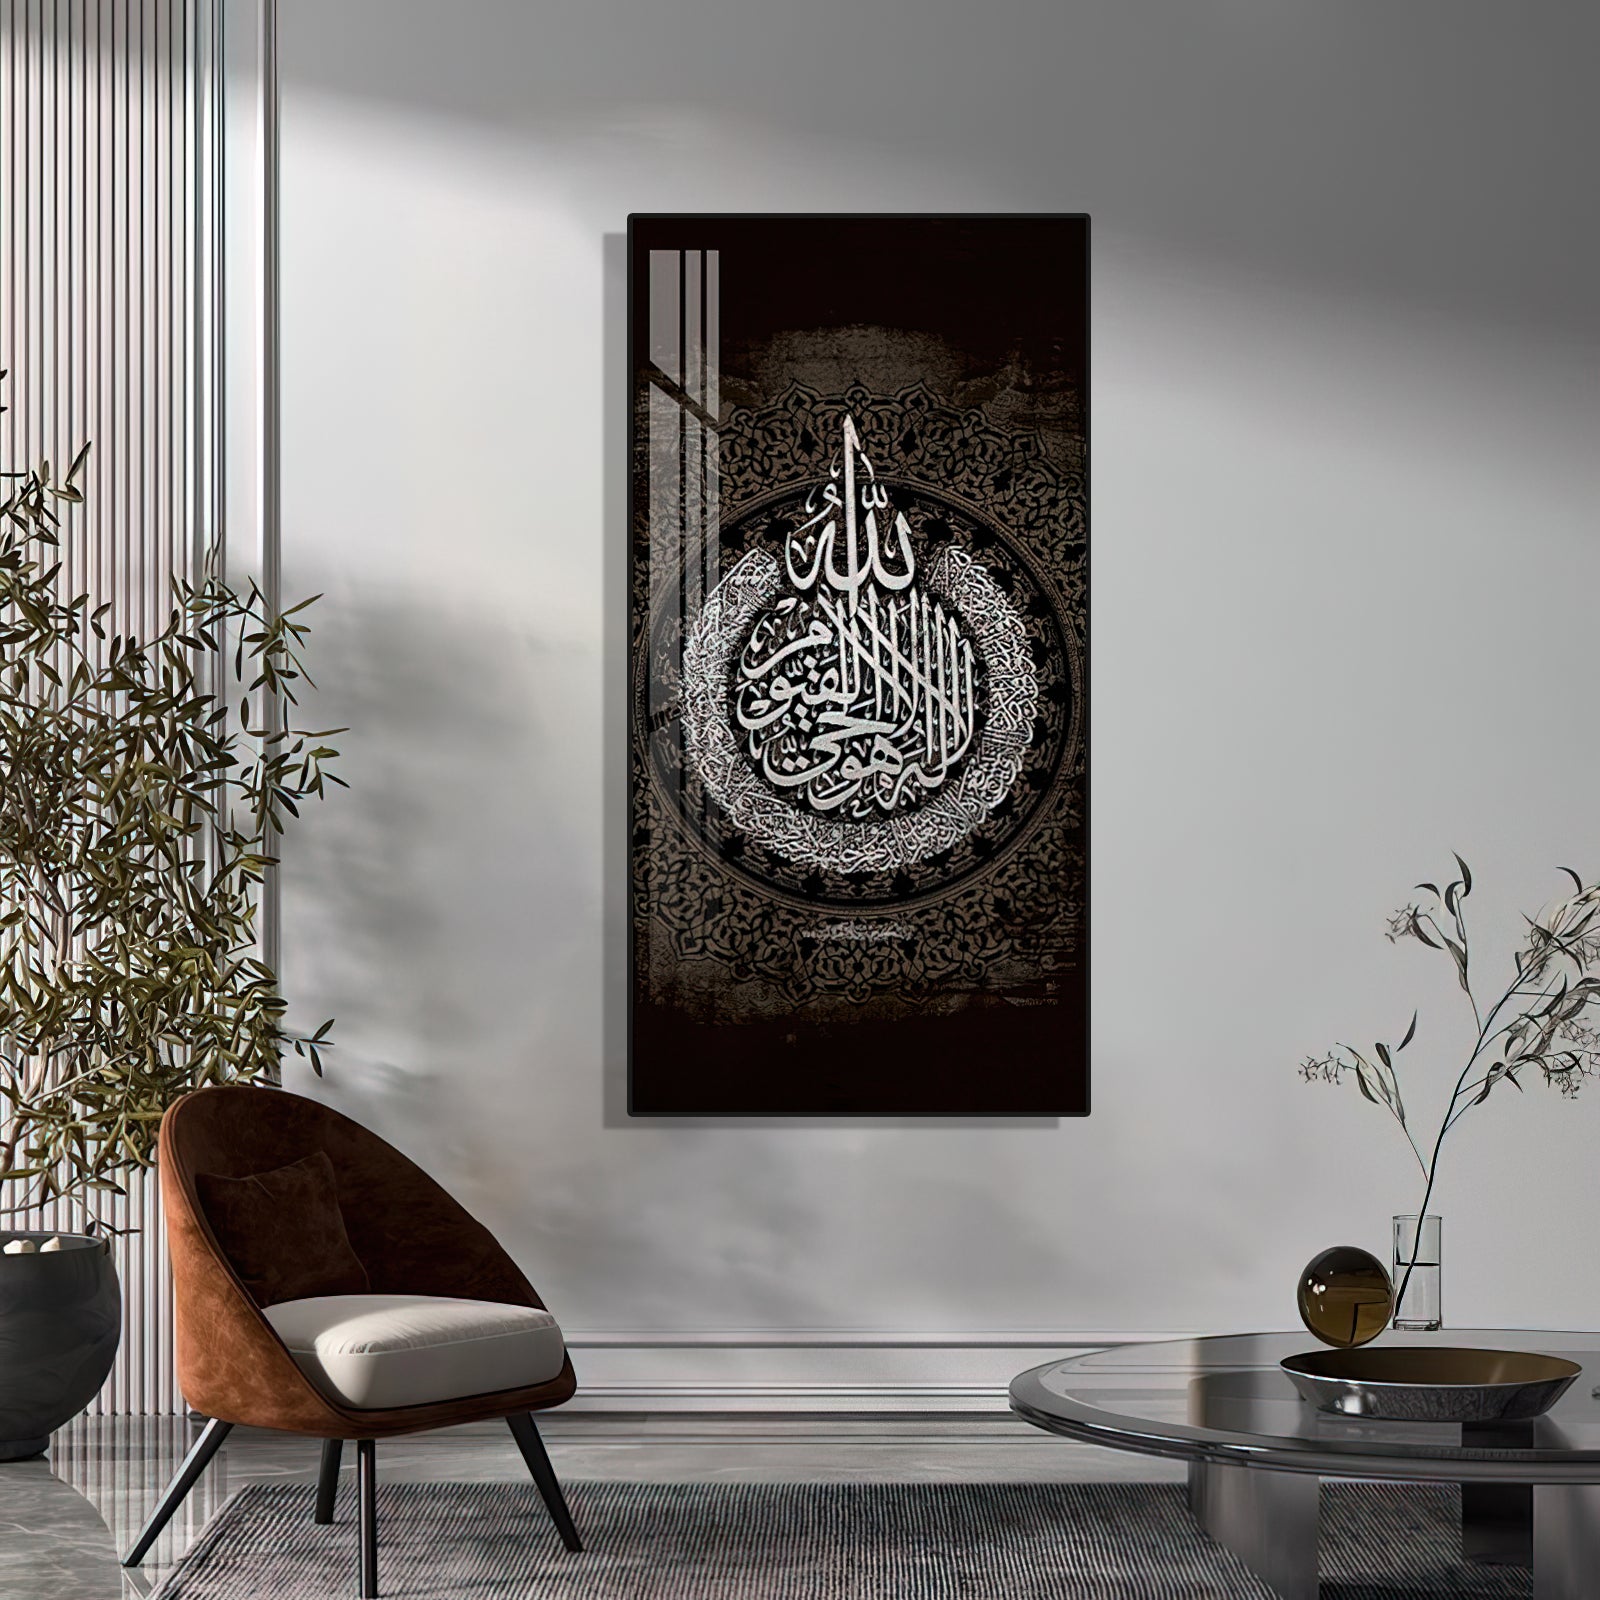 Ayatul Kursi Wall Art: Guarded by Divine Words Home Decor Muslim Allah Bismillah Ayat Quran  crystal porcelain Framed calligraphy verses